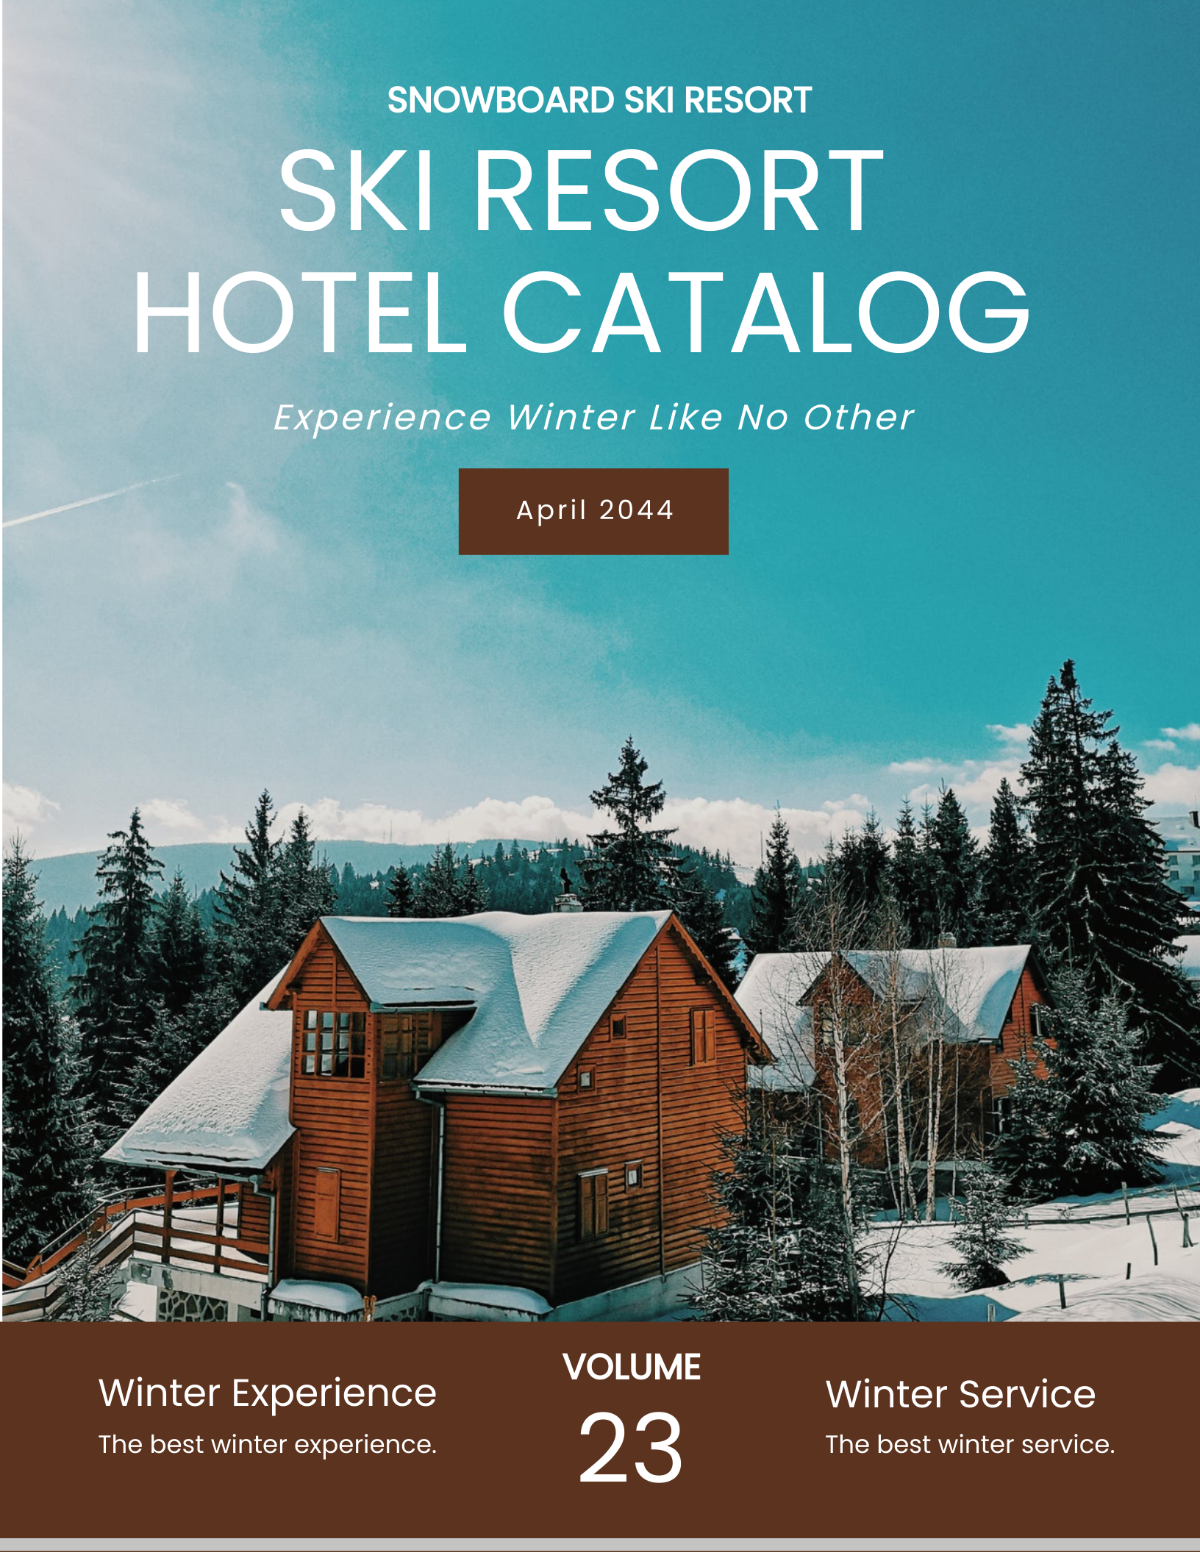 Ski Resort Hotel Catalog Template